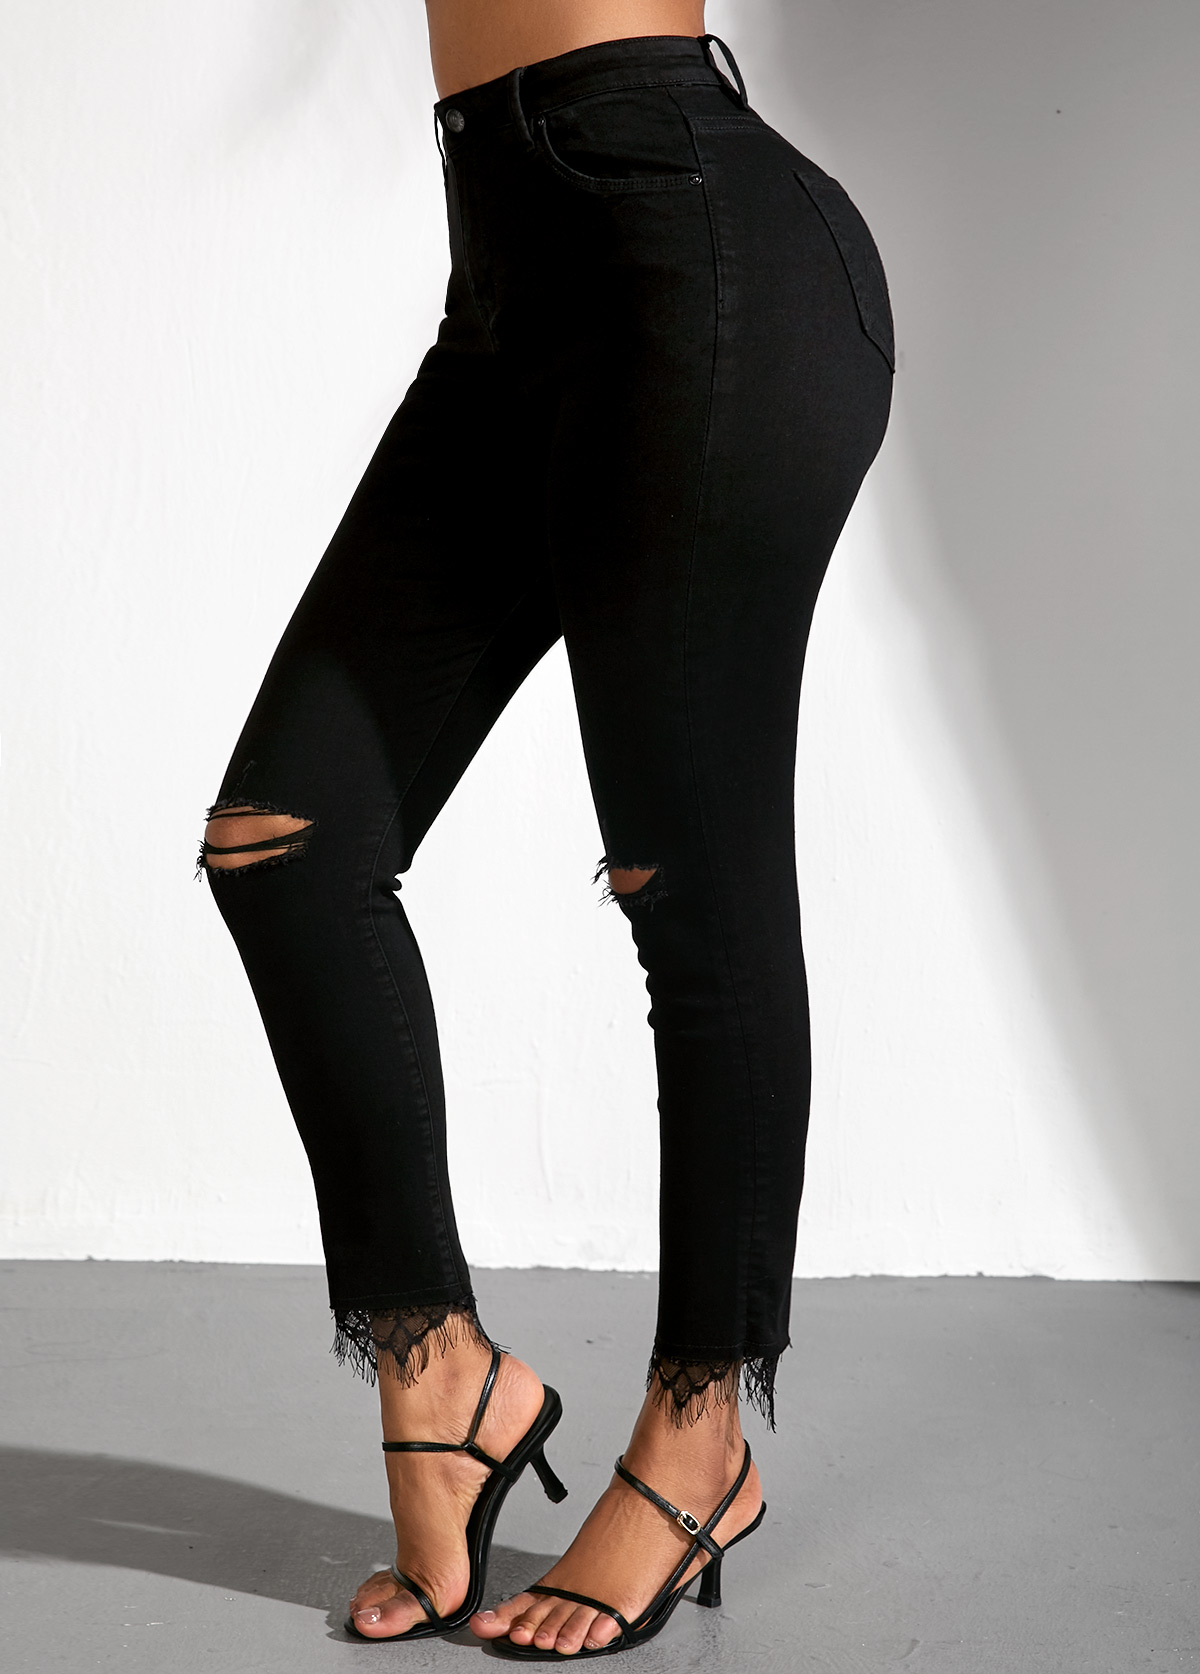 Lace Panel Black High Waist Shredded Jeans | Rosewe.com - USD $31.98